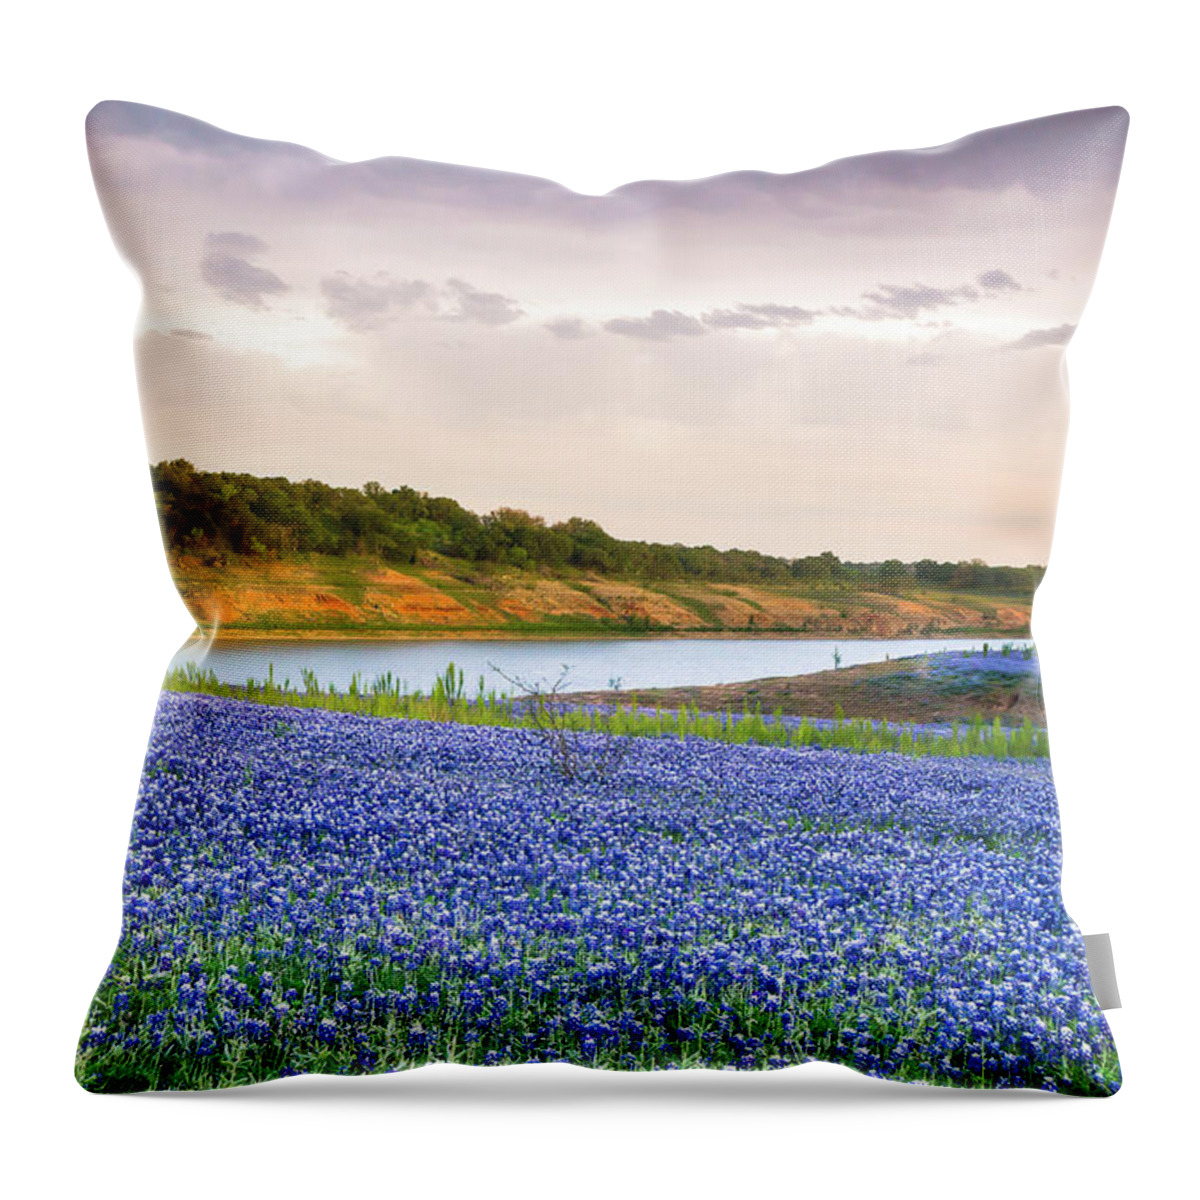 Texas Bluebonnet Throw Pillow featuring the photograph Bluebonnets Along The Colorado River - Texas by Ellie Teramoto